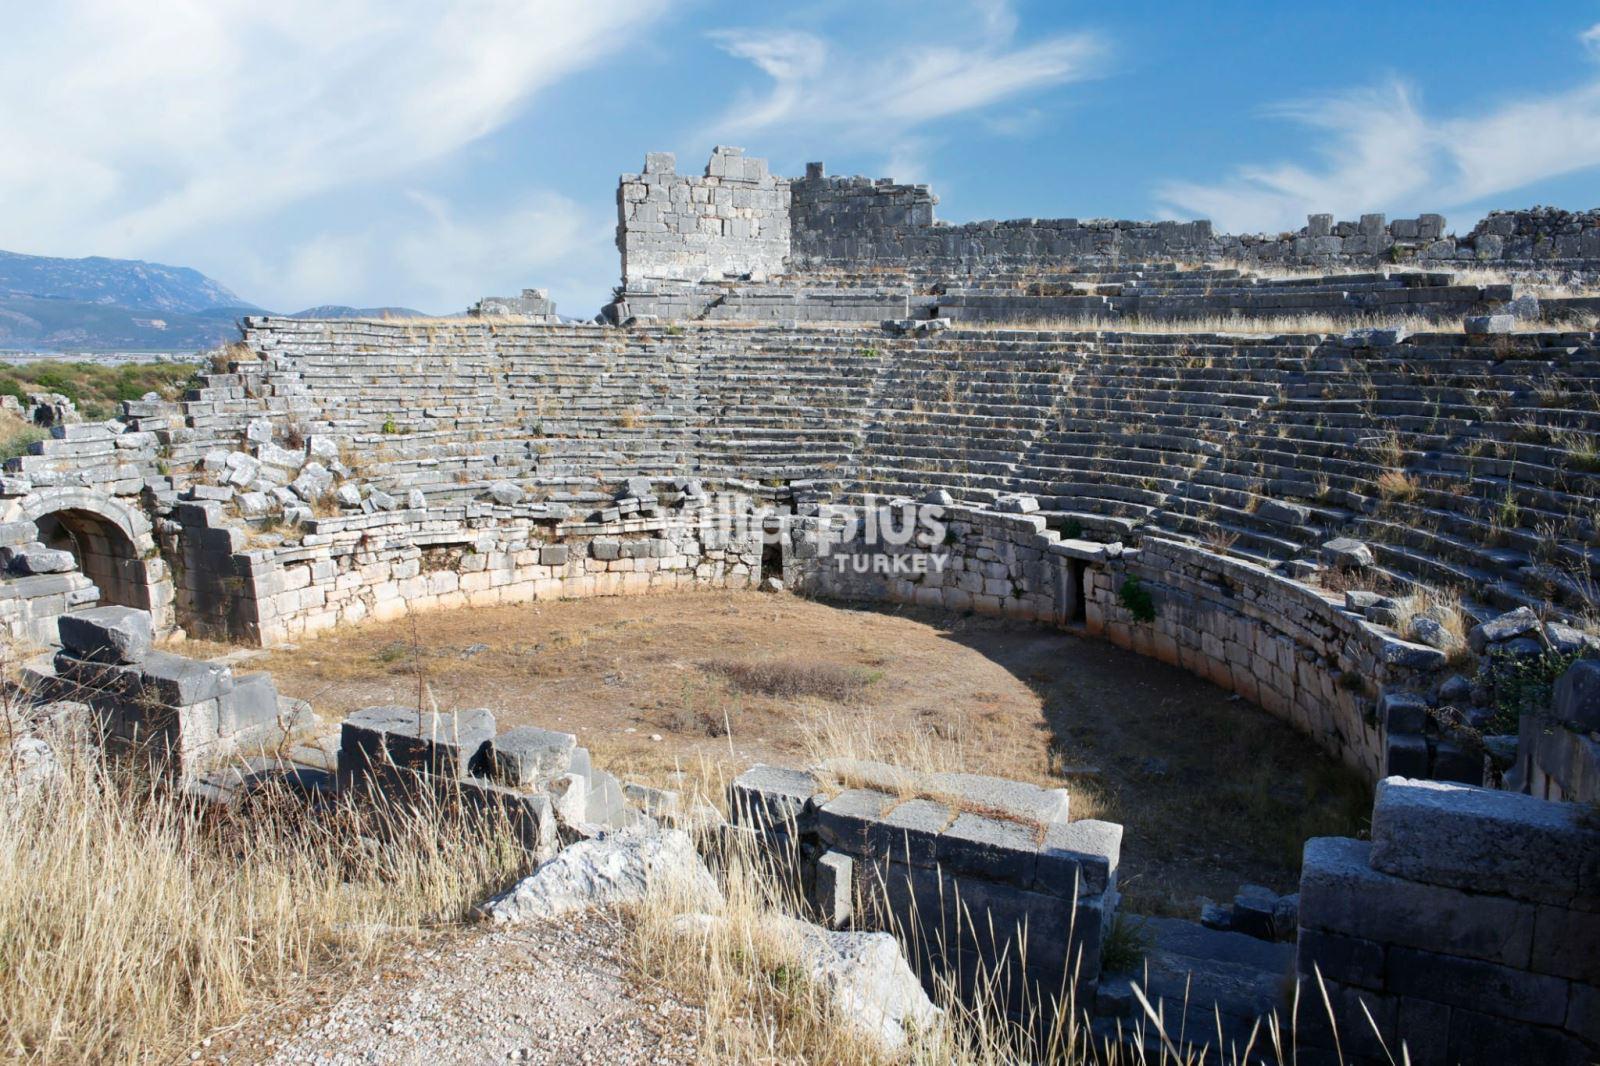 xanthos ancient city: ruins